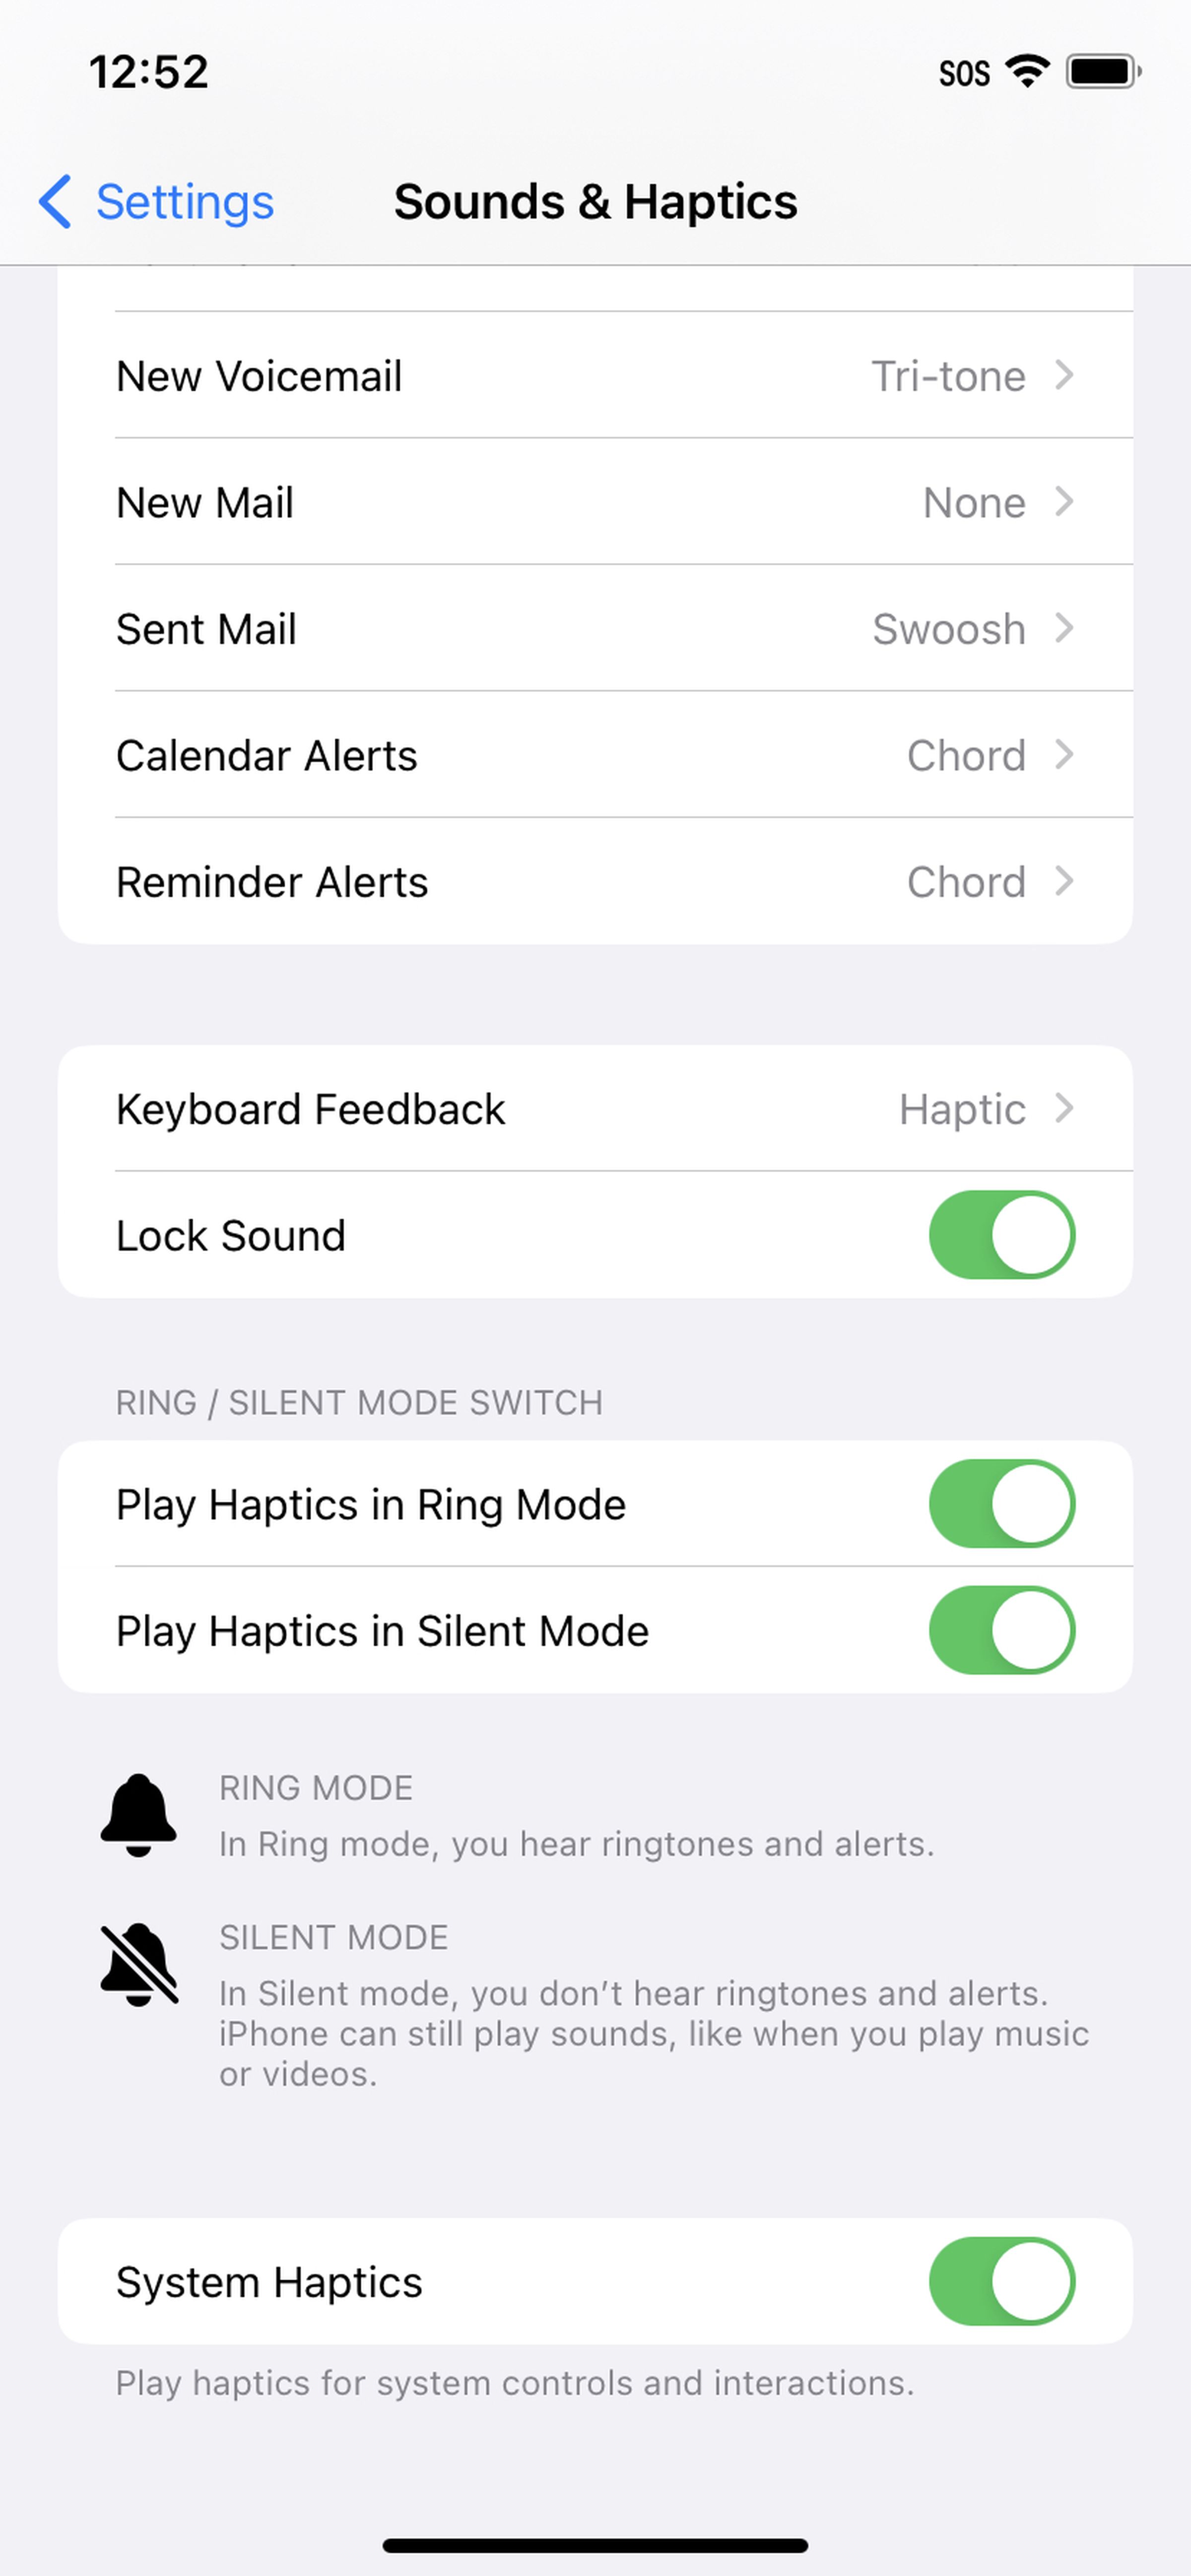 Sounds &amp; haptics menu